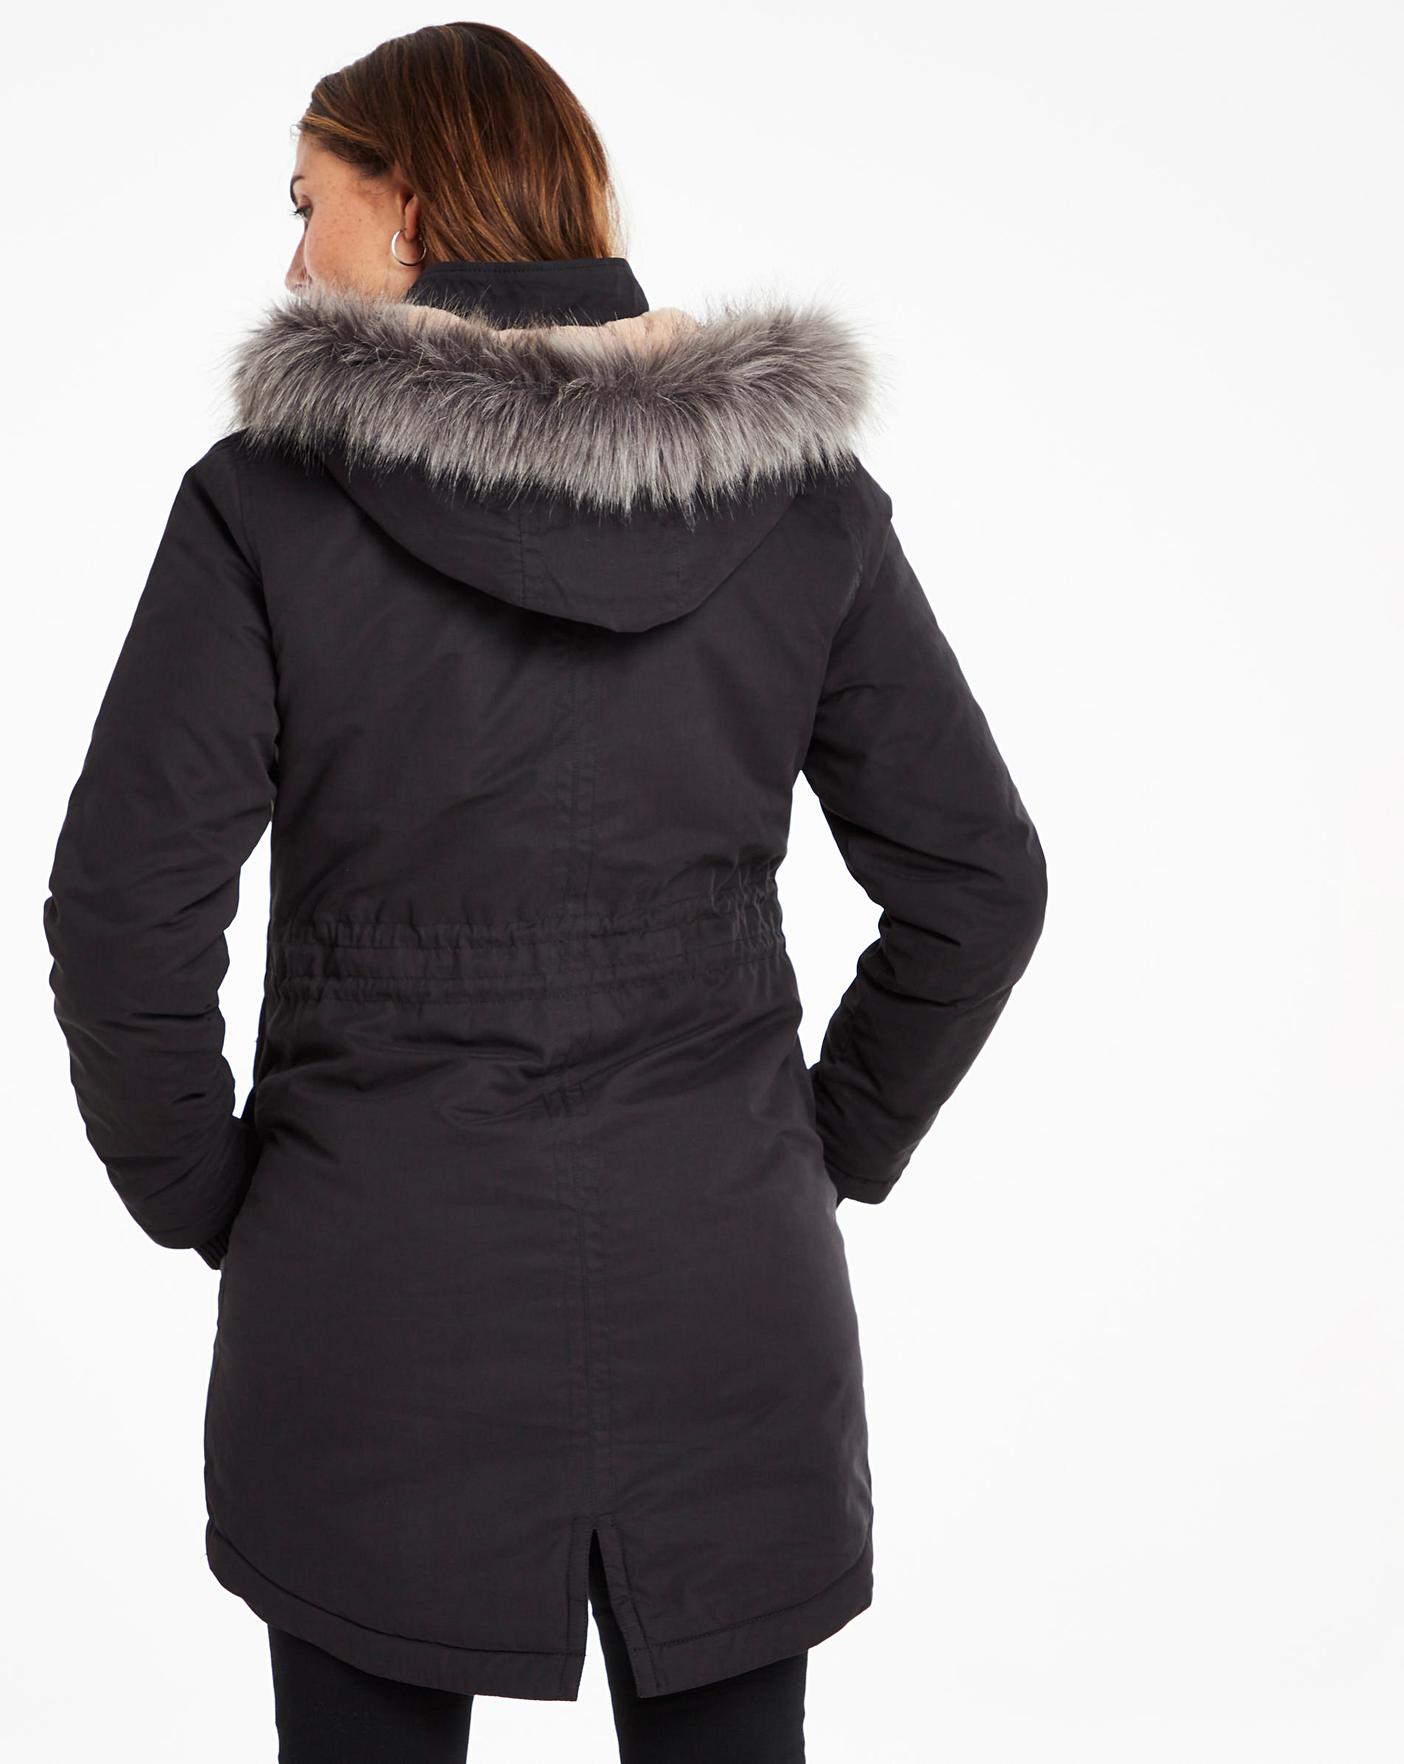 Black Faux Fur Lined Parka Coat | J D Williams